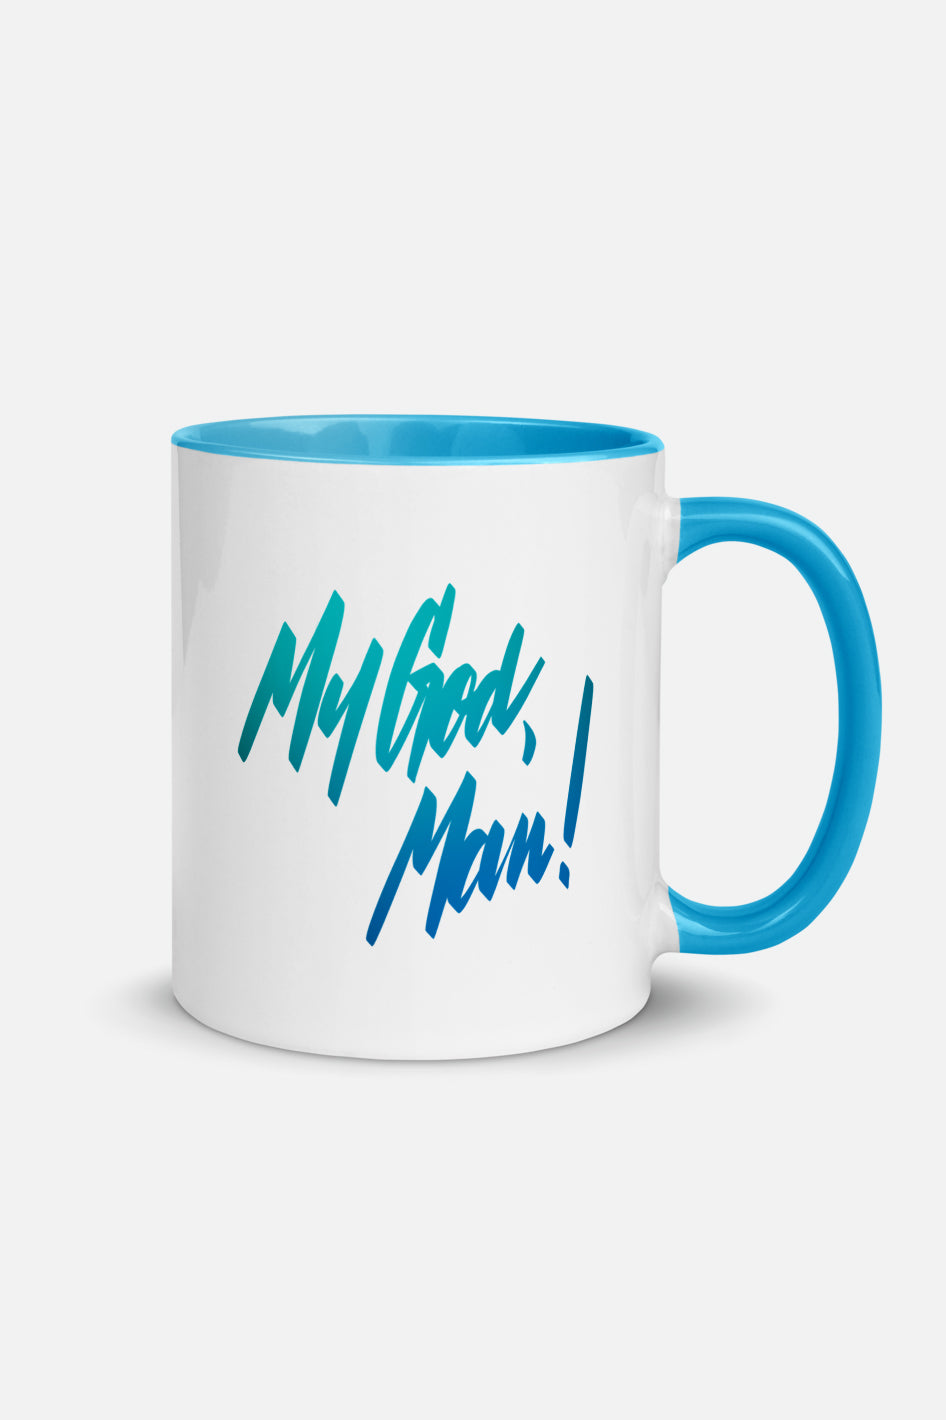 My God, Man! Colorful Mug